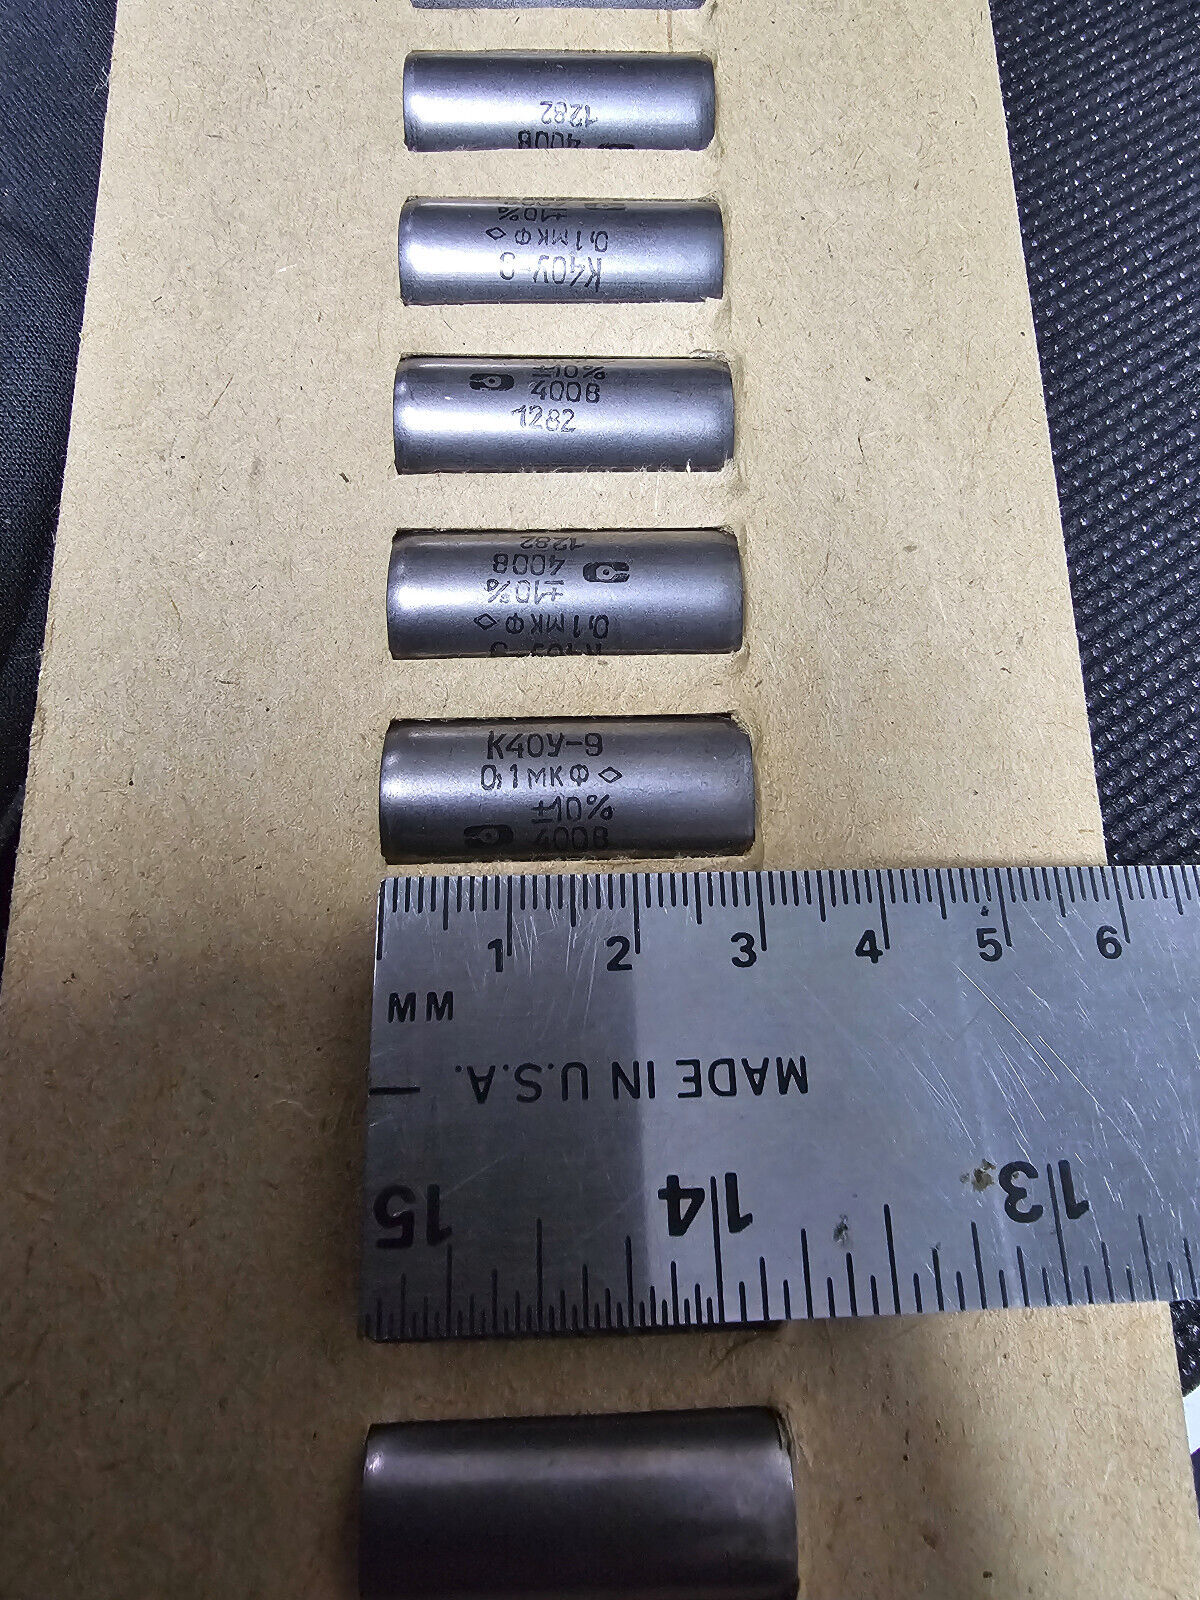 2pcs 0.1uf -400V PIO capacitors Matched pair K40Y-9